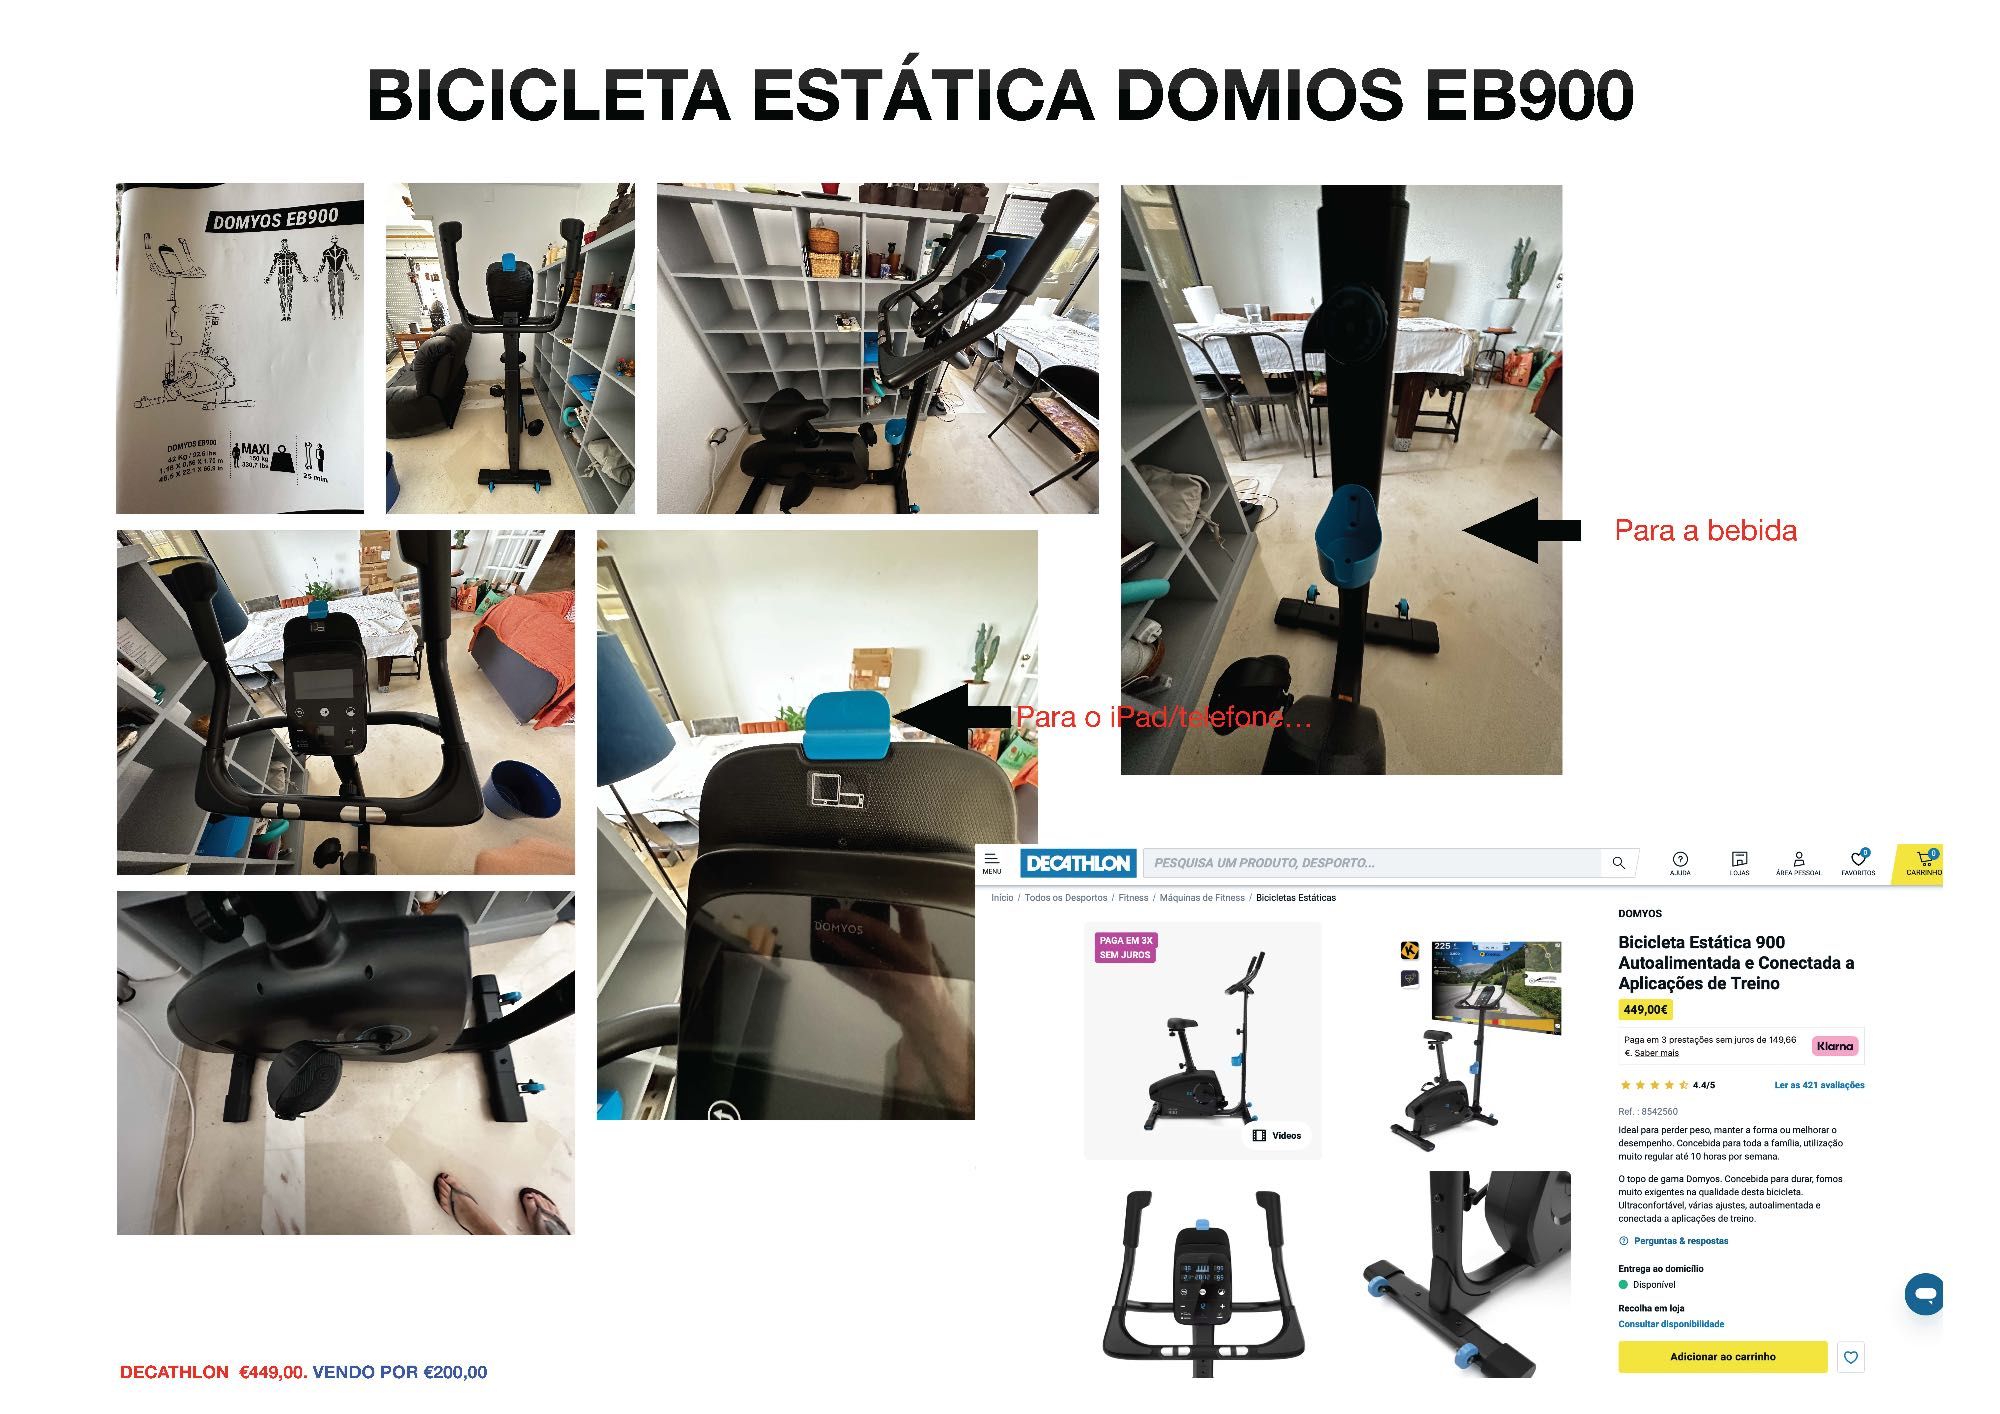 Bicicleta Estática Domios EB900